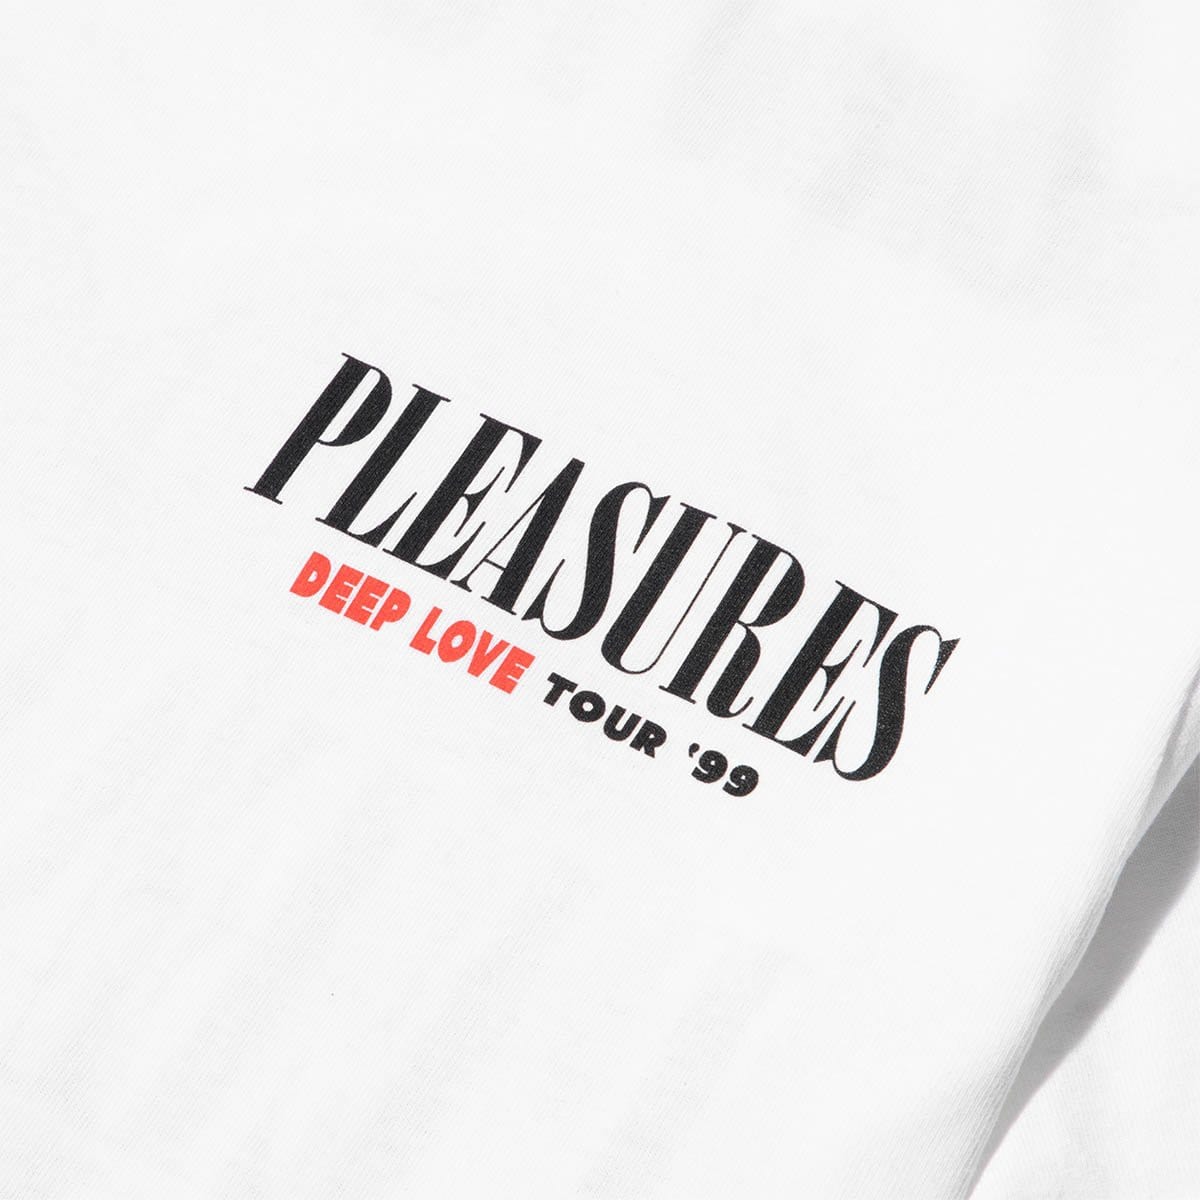 Pleasures T-Shirts DEEP LOVE T-SHIRT